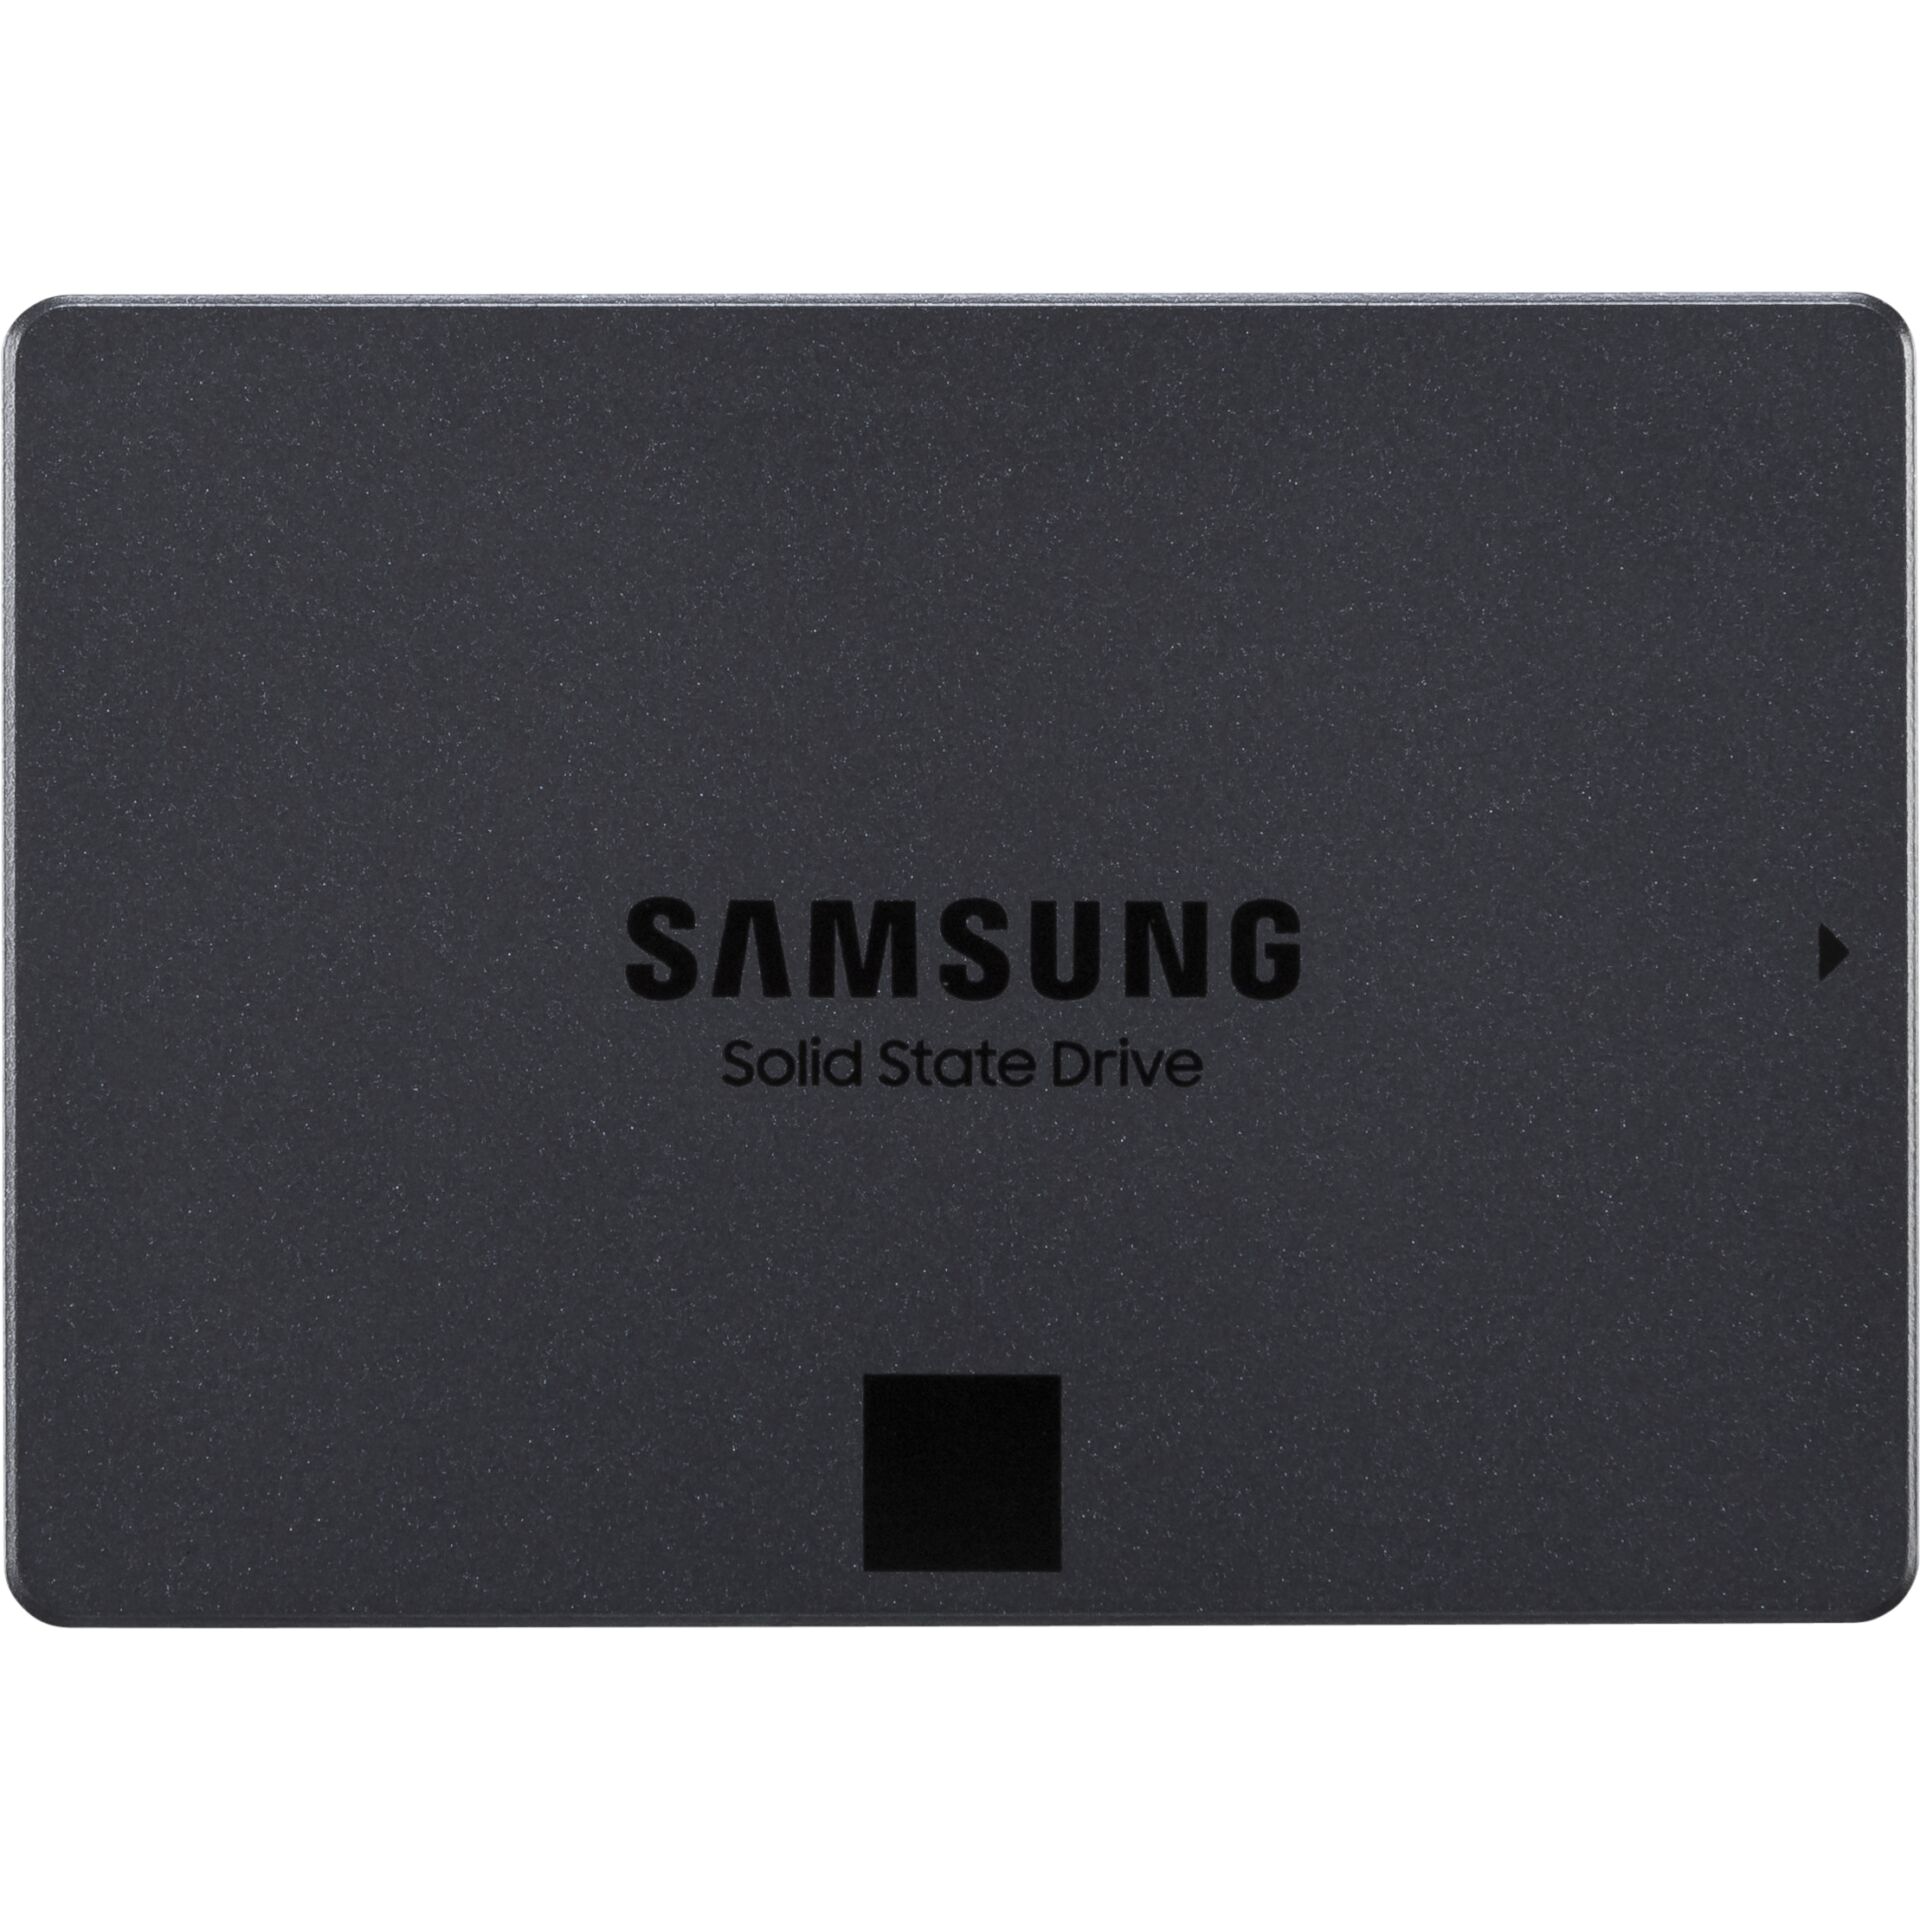 1.0 TB SSD Samsung 870 QVO, SATA 6Gb/s, lesen: 560MB/s, schreiben: 530MB/s SLC-Cached, TBW: 360TB